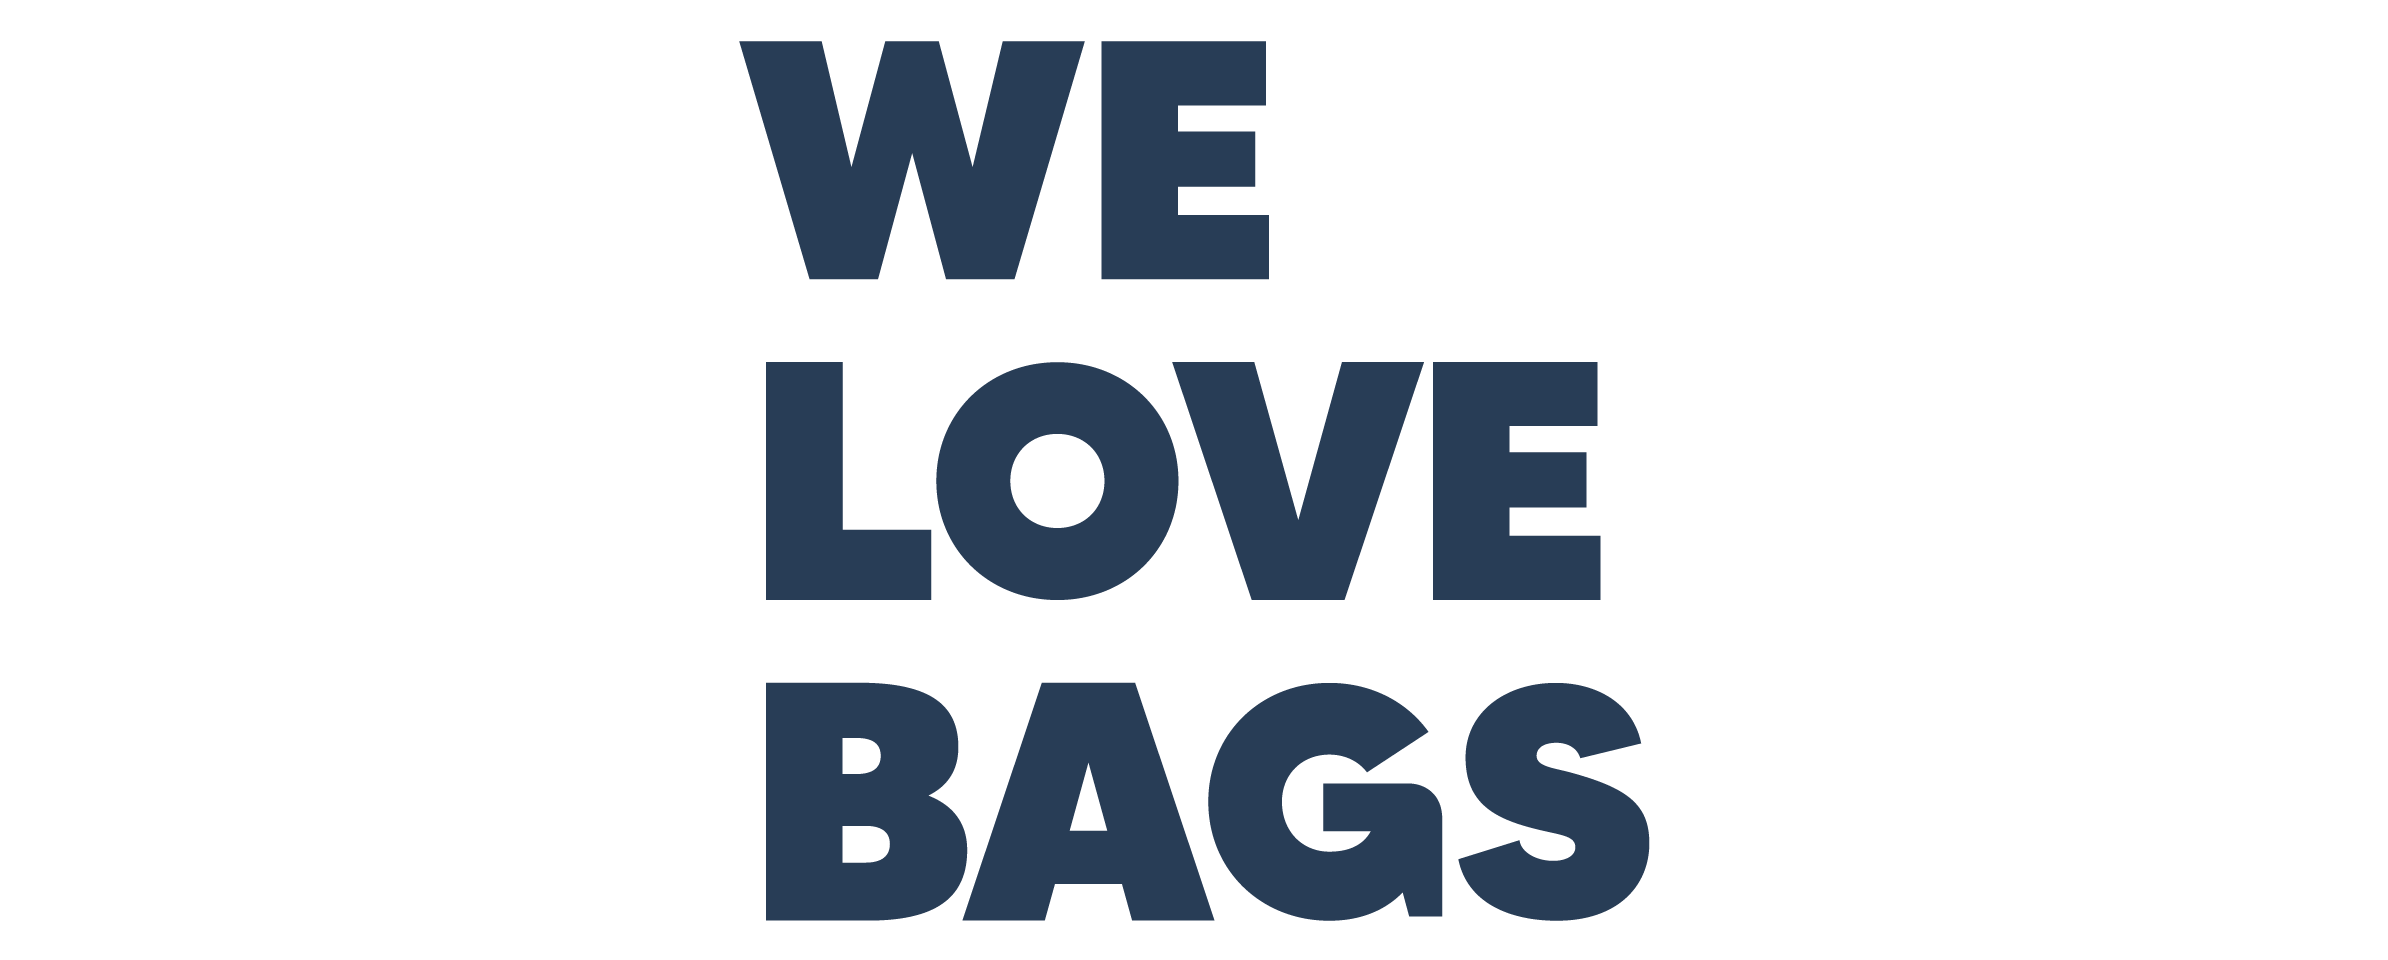 We Love Bags